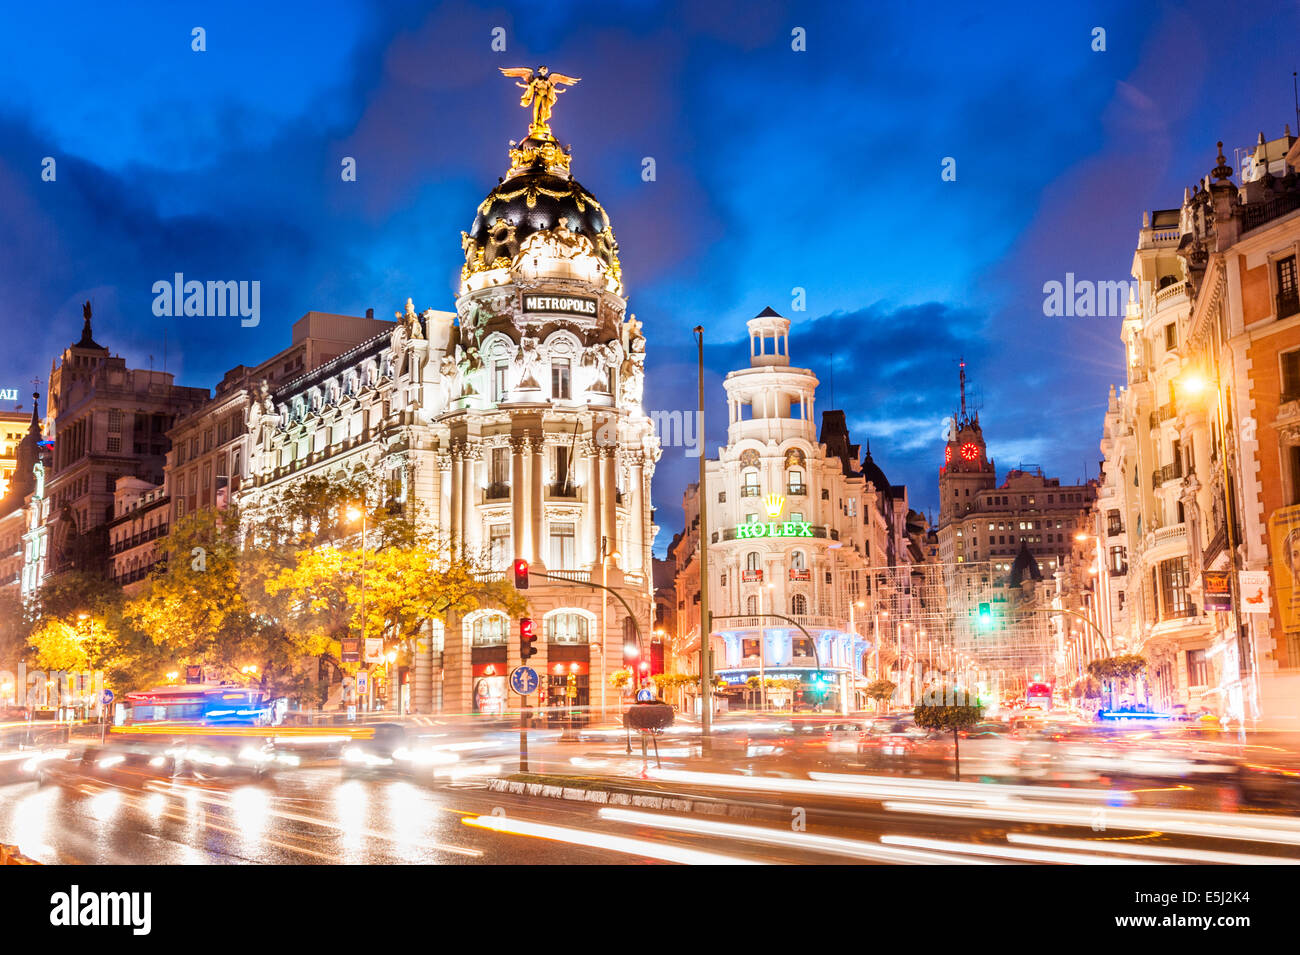 The Metropolis Building on the corner of Calle de Alcala and Gran Via, Madrid, Spain Stock Photo